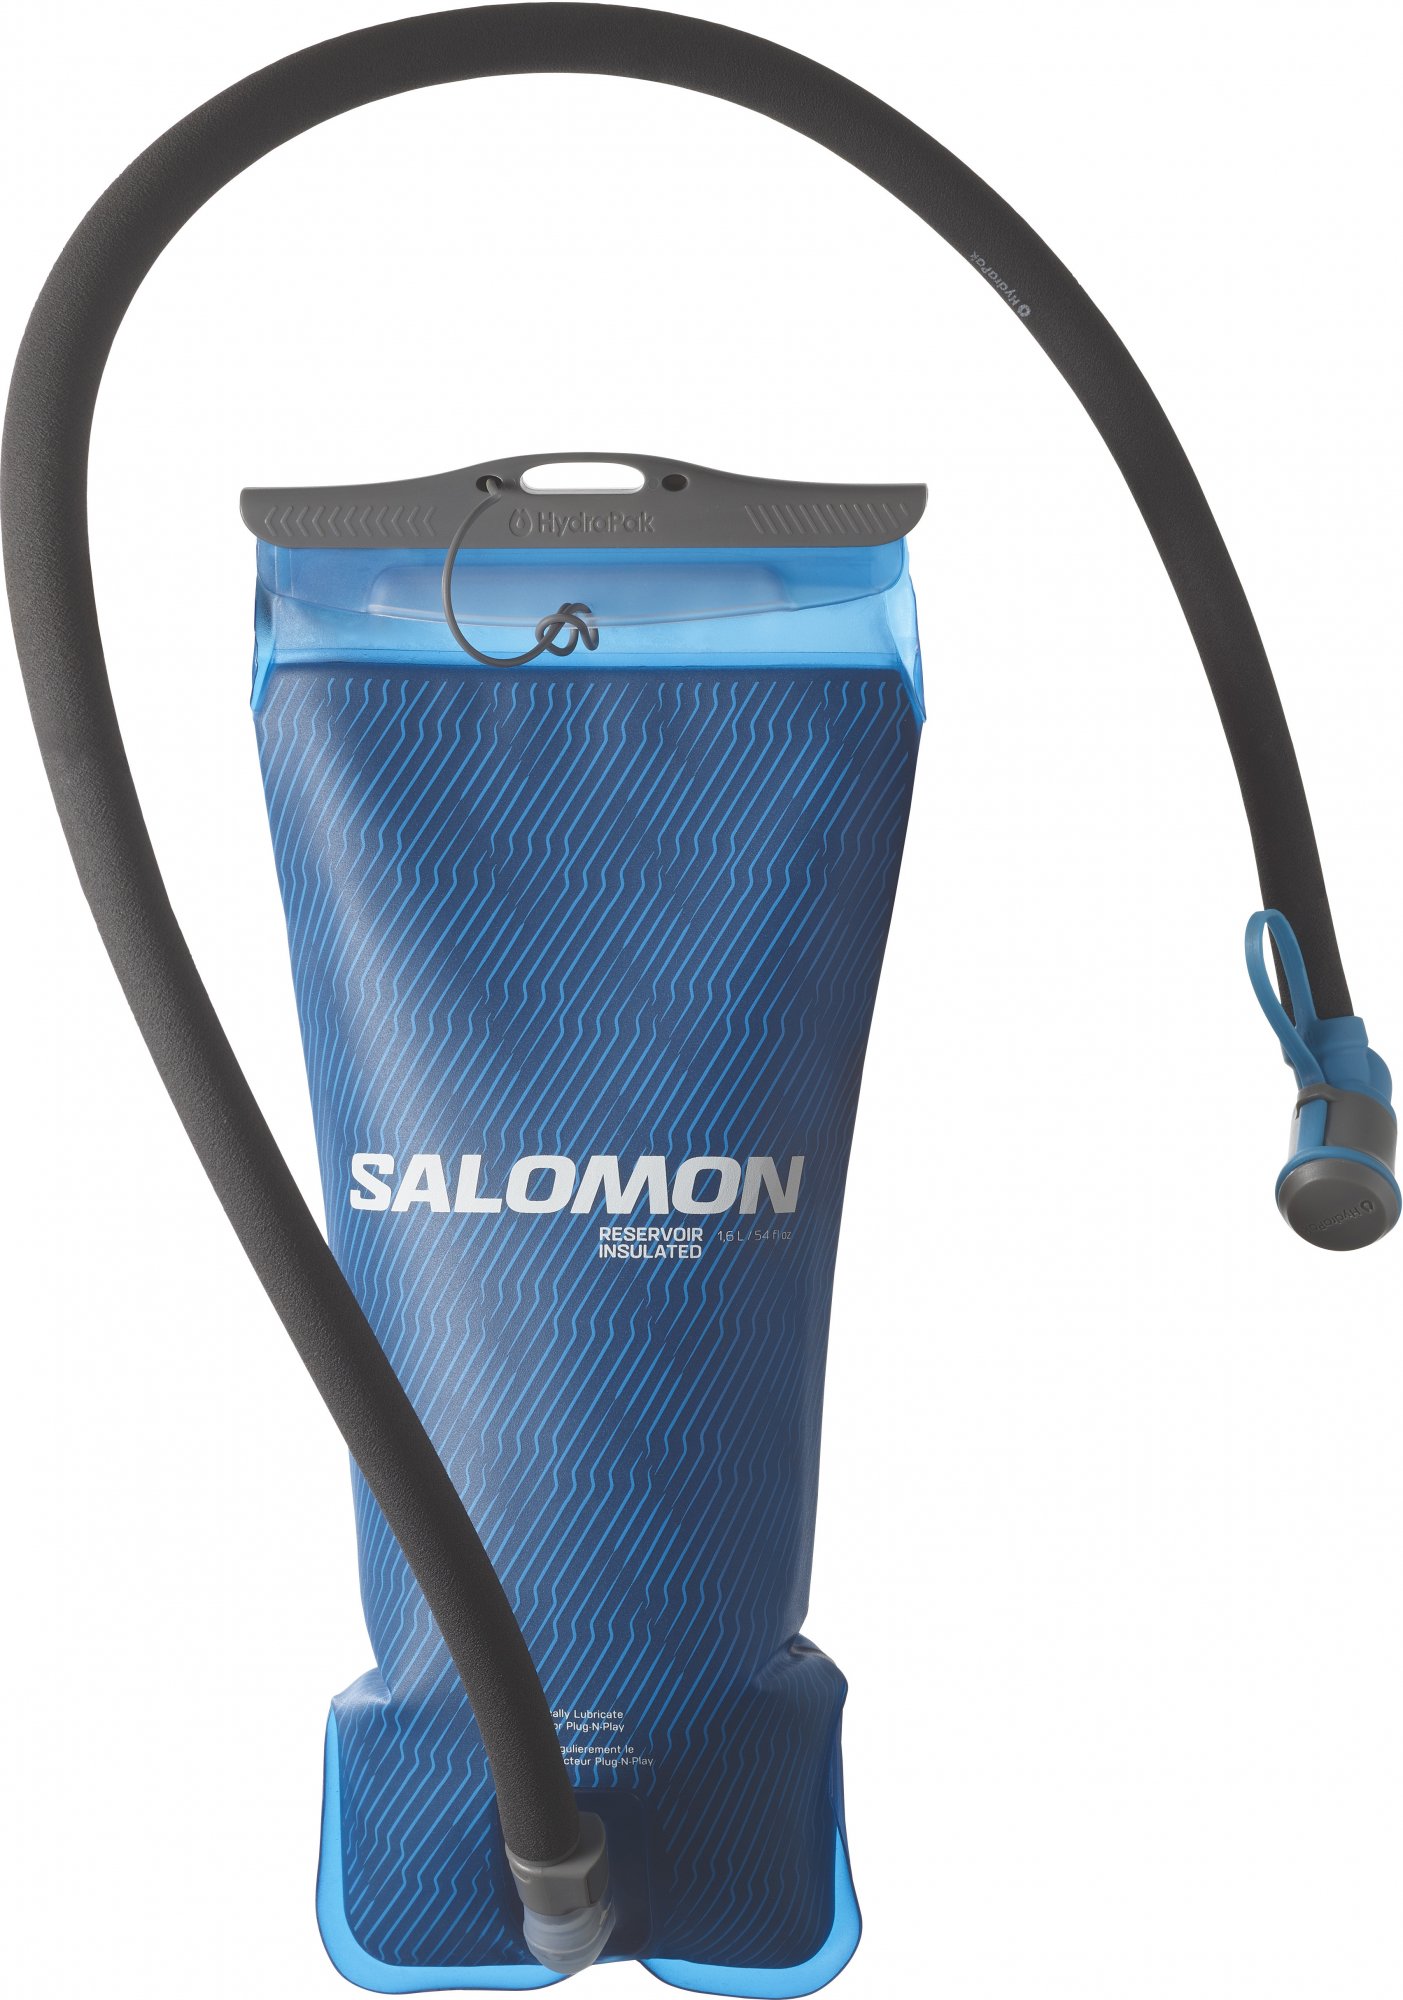 SALAMON SOFT RESERVOIR 1.6L INSULATED Clear Blue